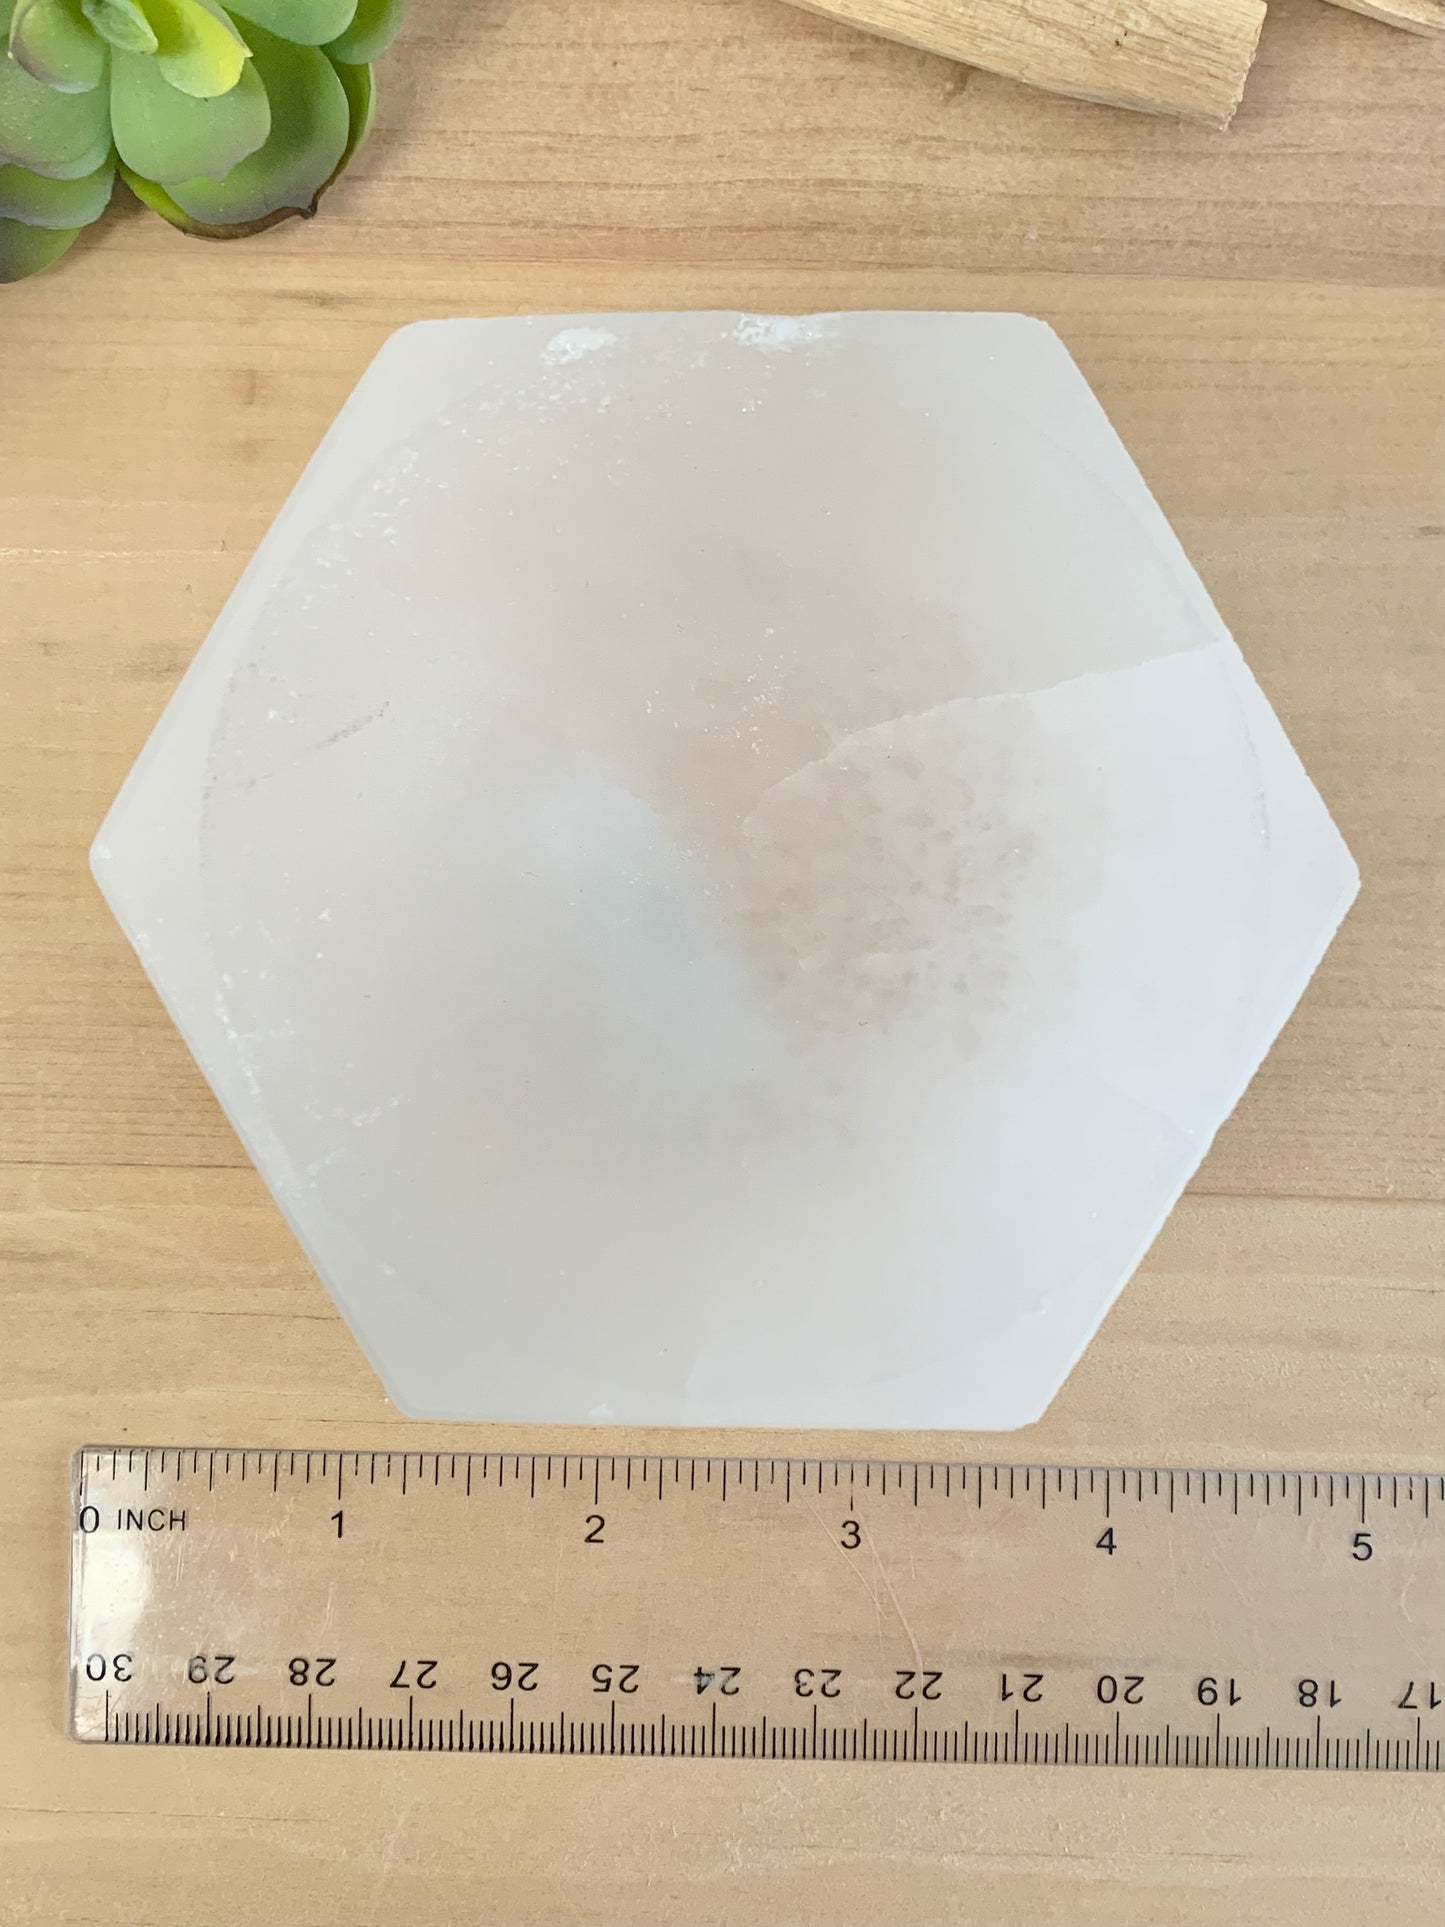 Satin Spar (Selenite) Decorative Hexagon Crystal Dish, Bowl